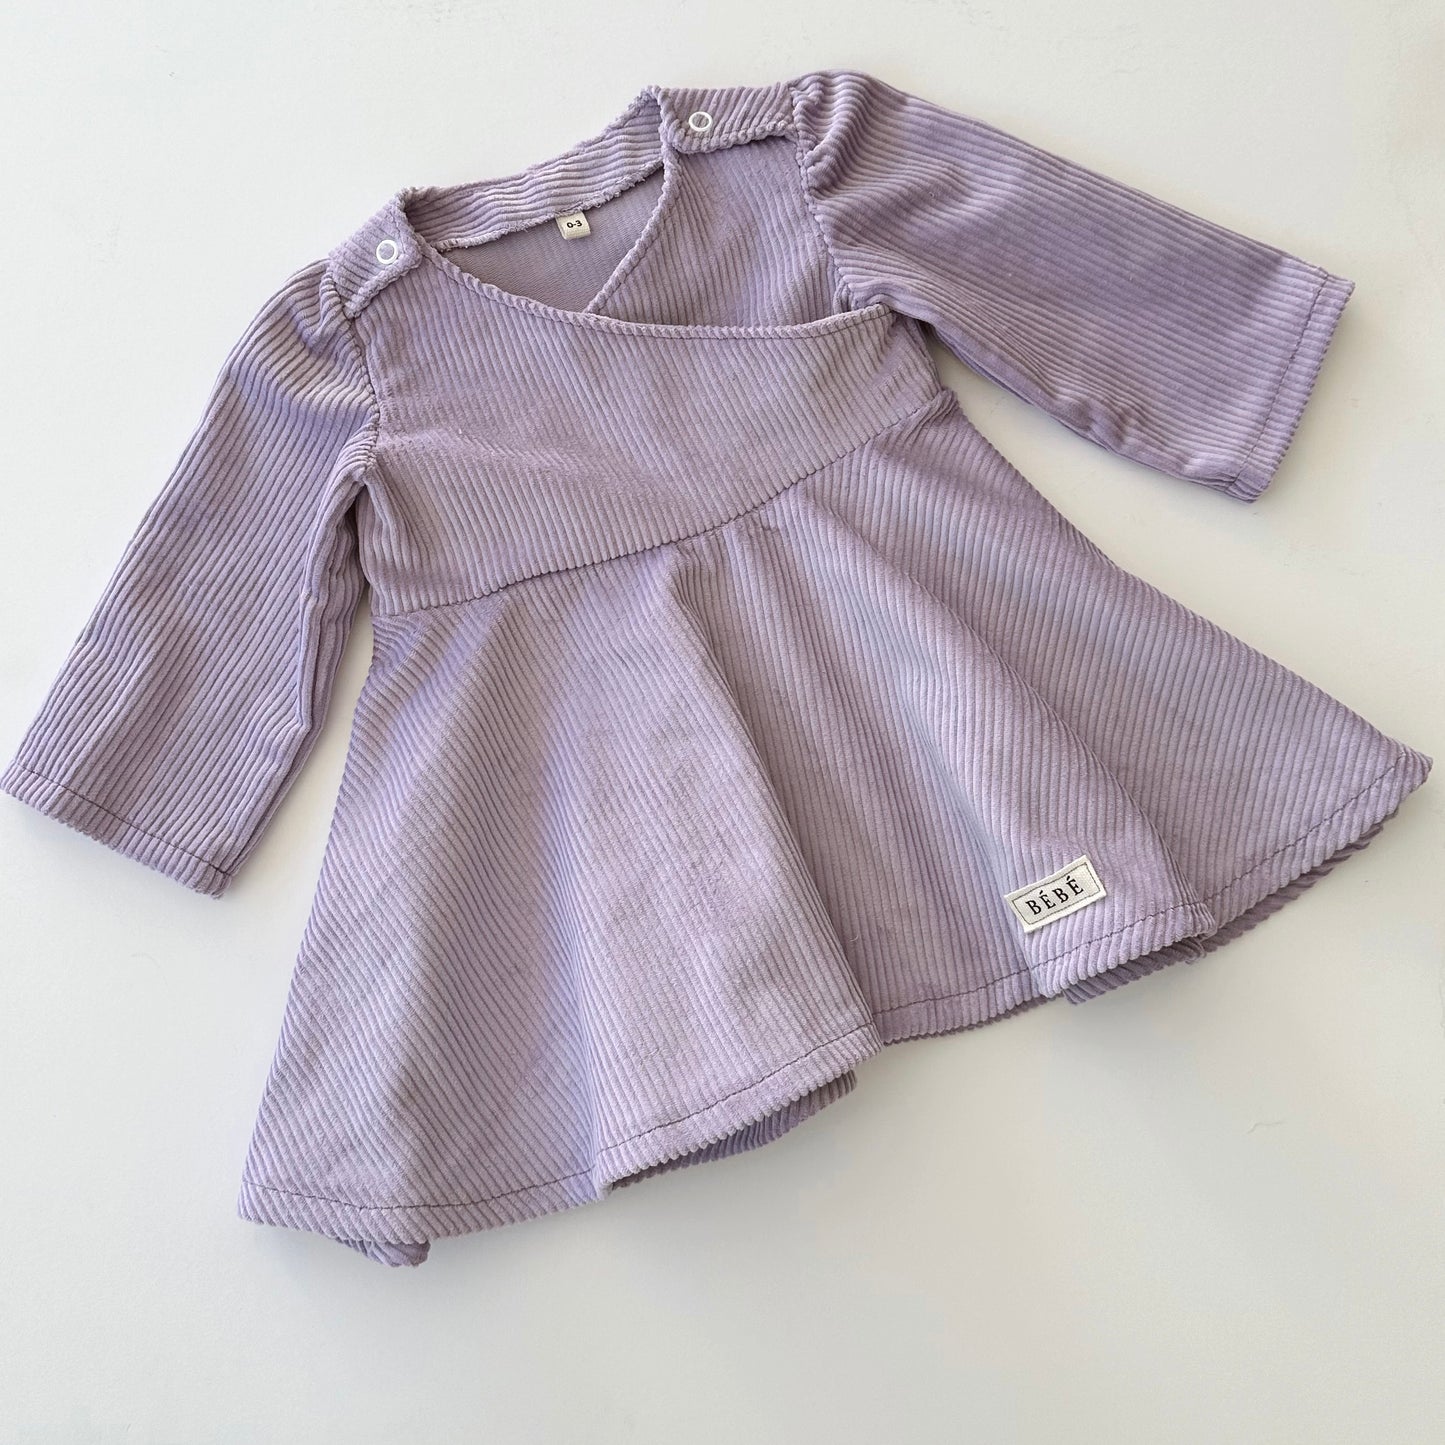 Lavender Dress